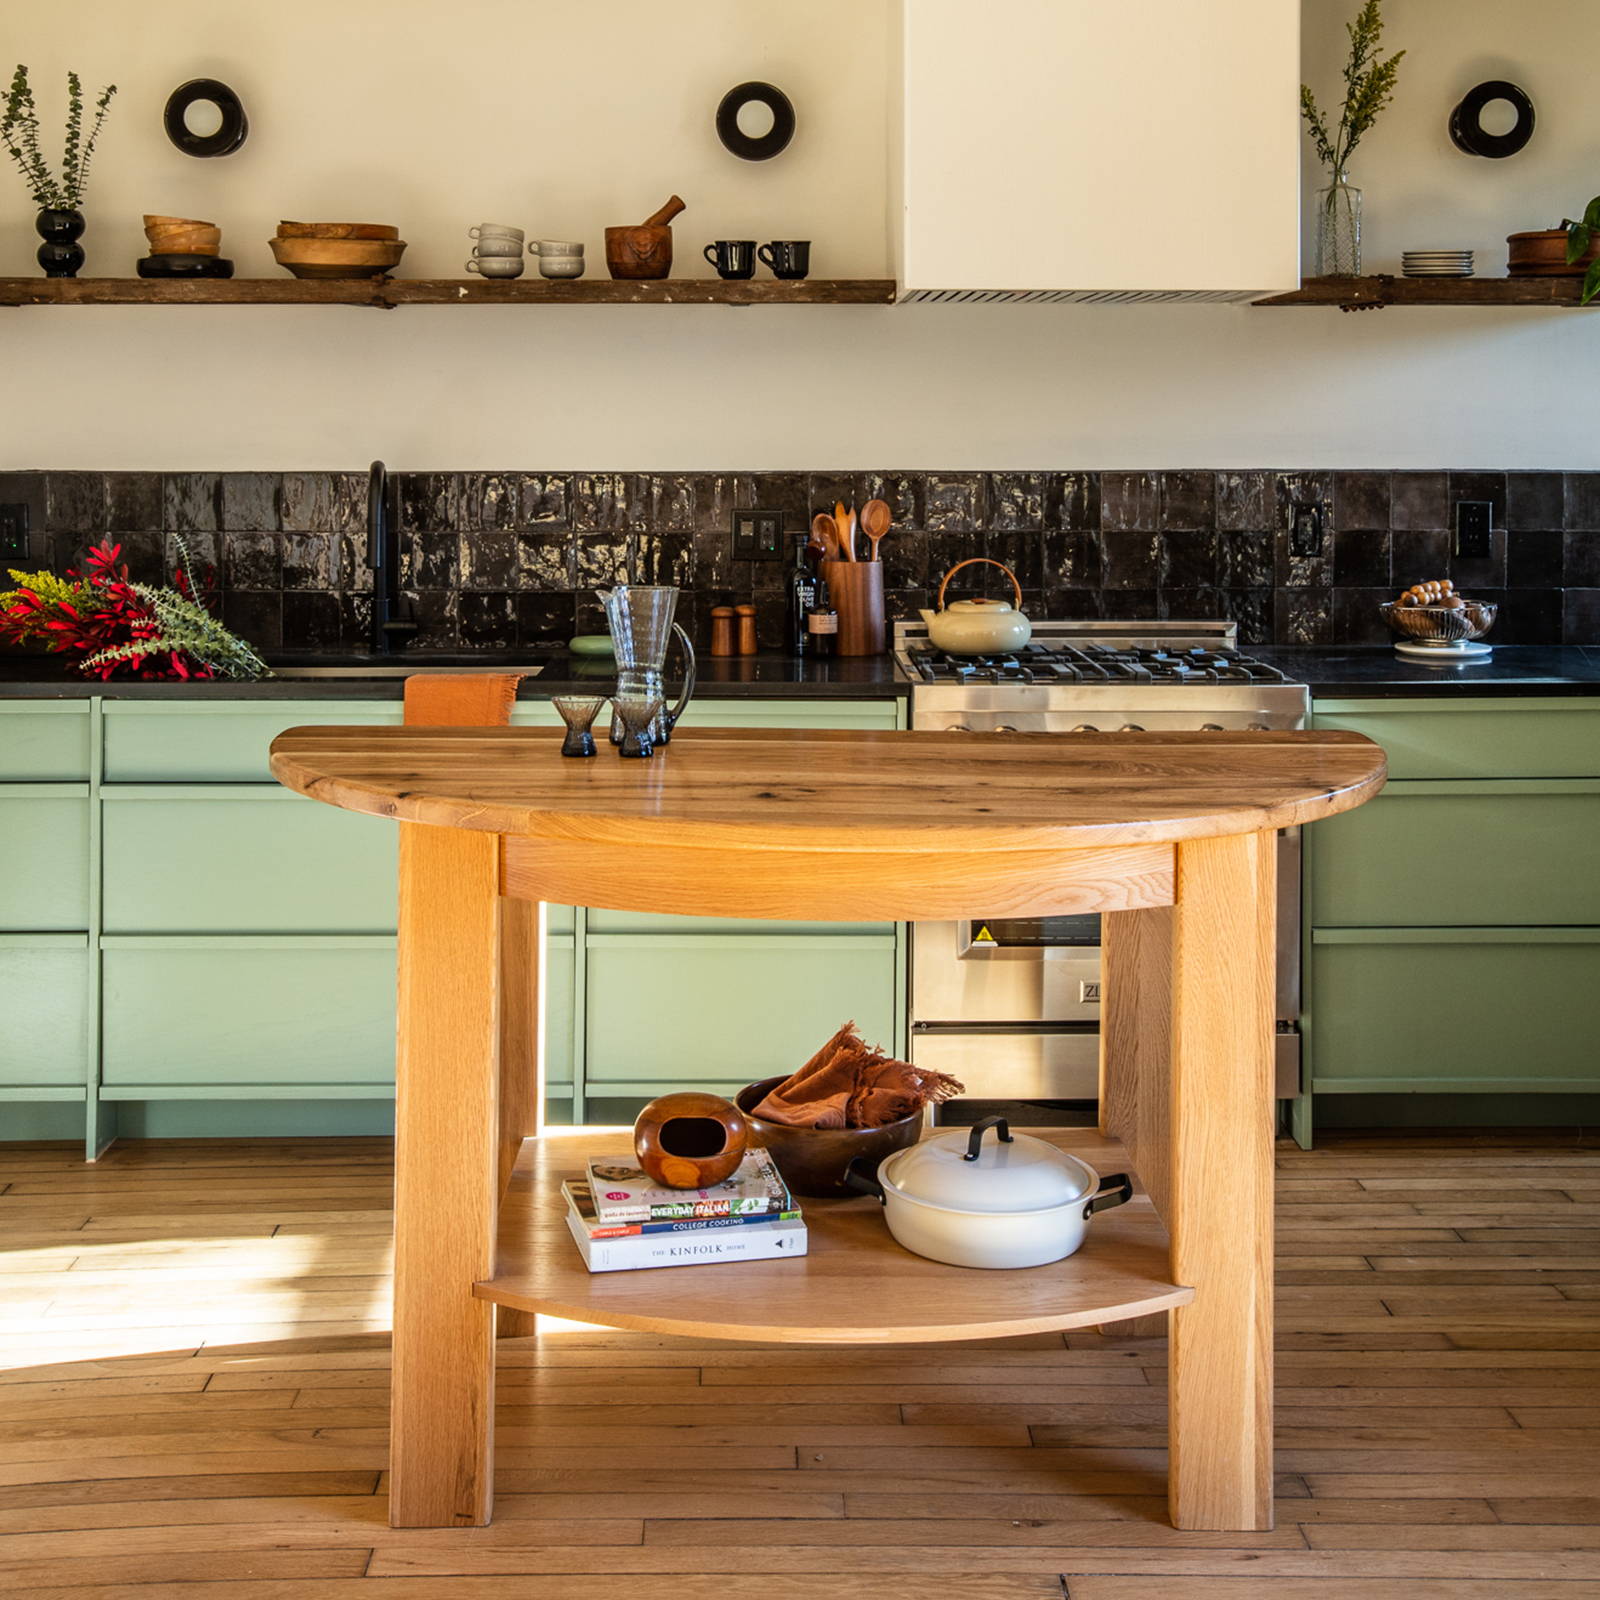 Modern kitchen interior design, featuring a half-mood kitchen island in white oak from Woodward Throwbacks.